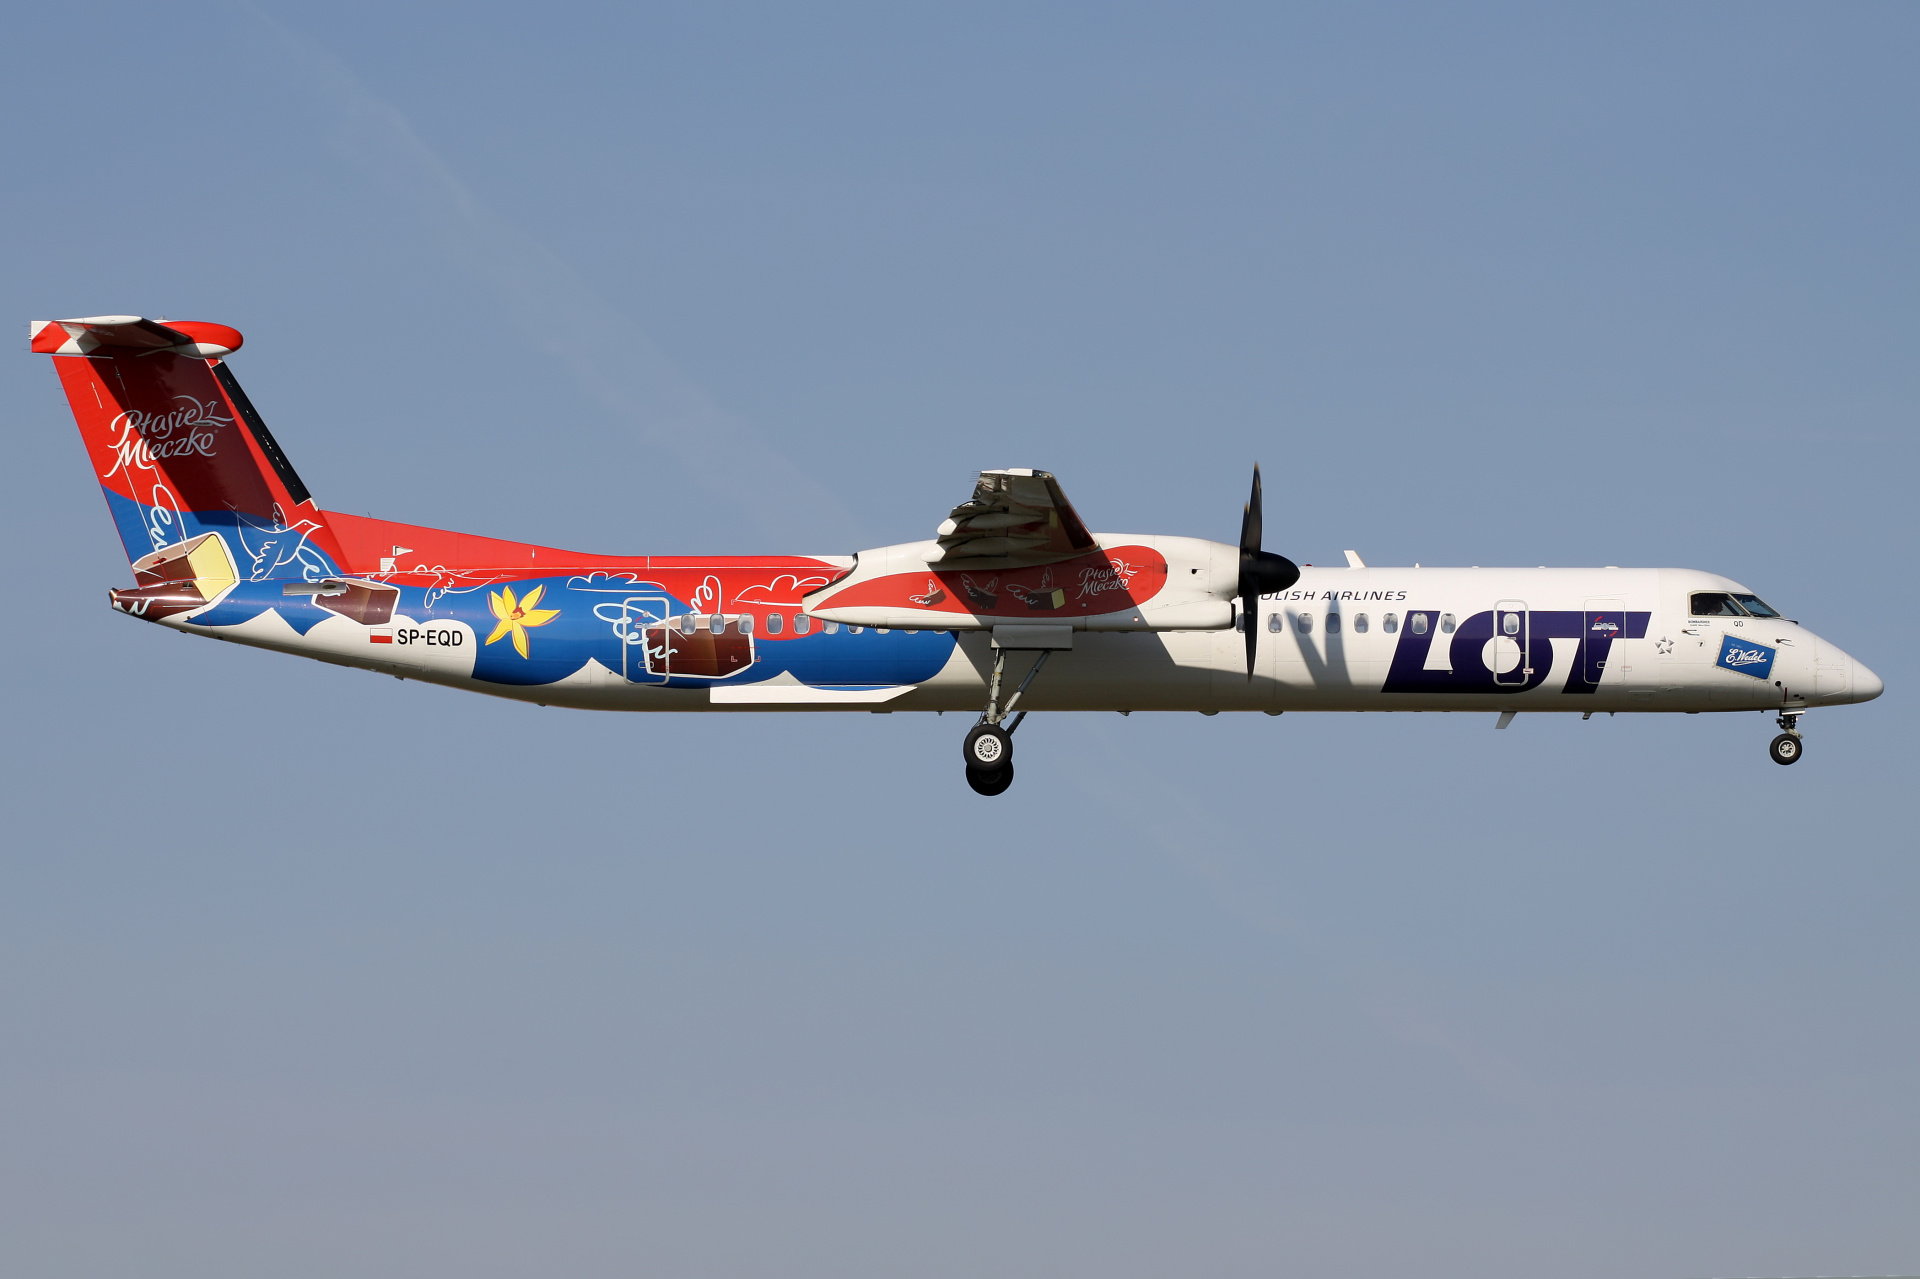 SP-EQD (Wedel Ptasie Mleczko livery) (Aircraft » EPWA Spotting » De Havilland Canada DHC-8 Dash 8 » LOT Polish Airlines)